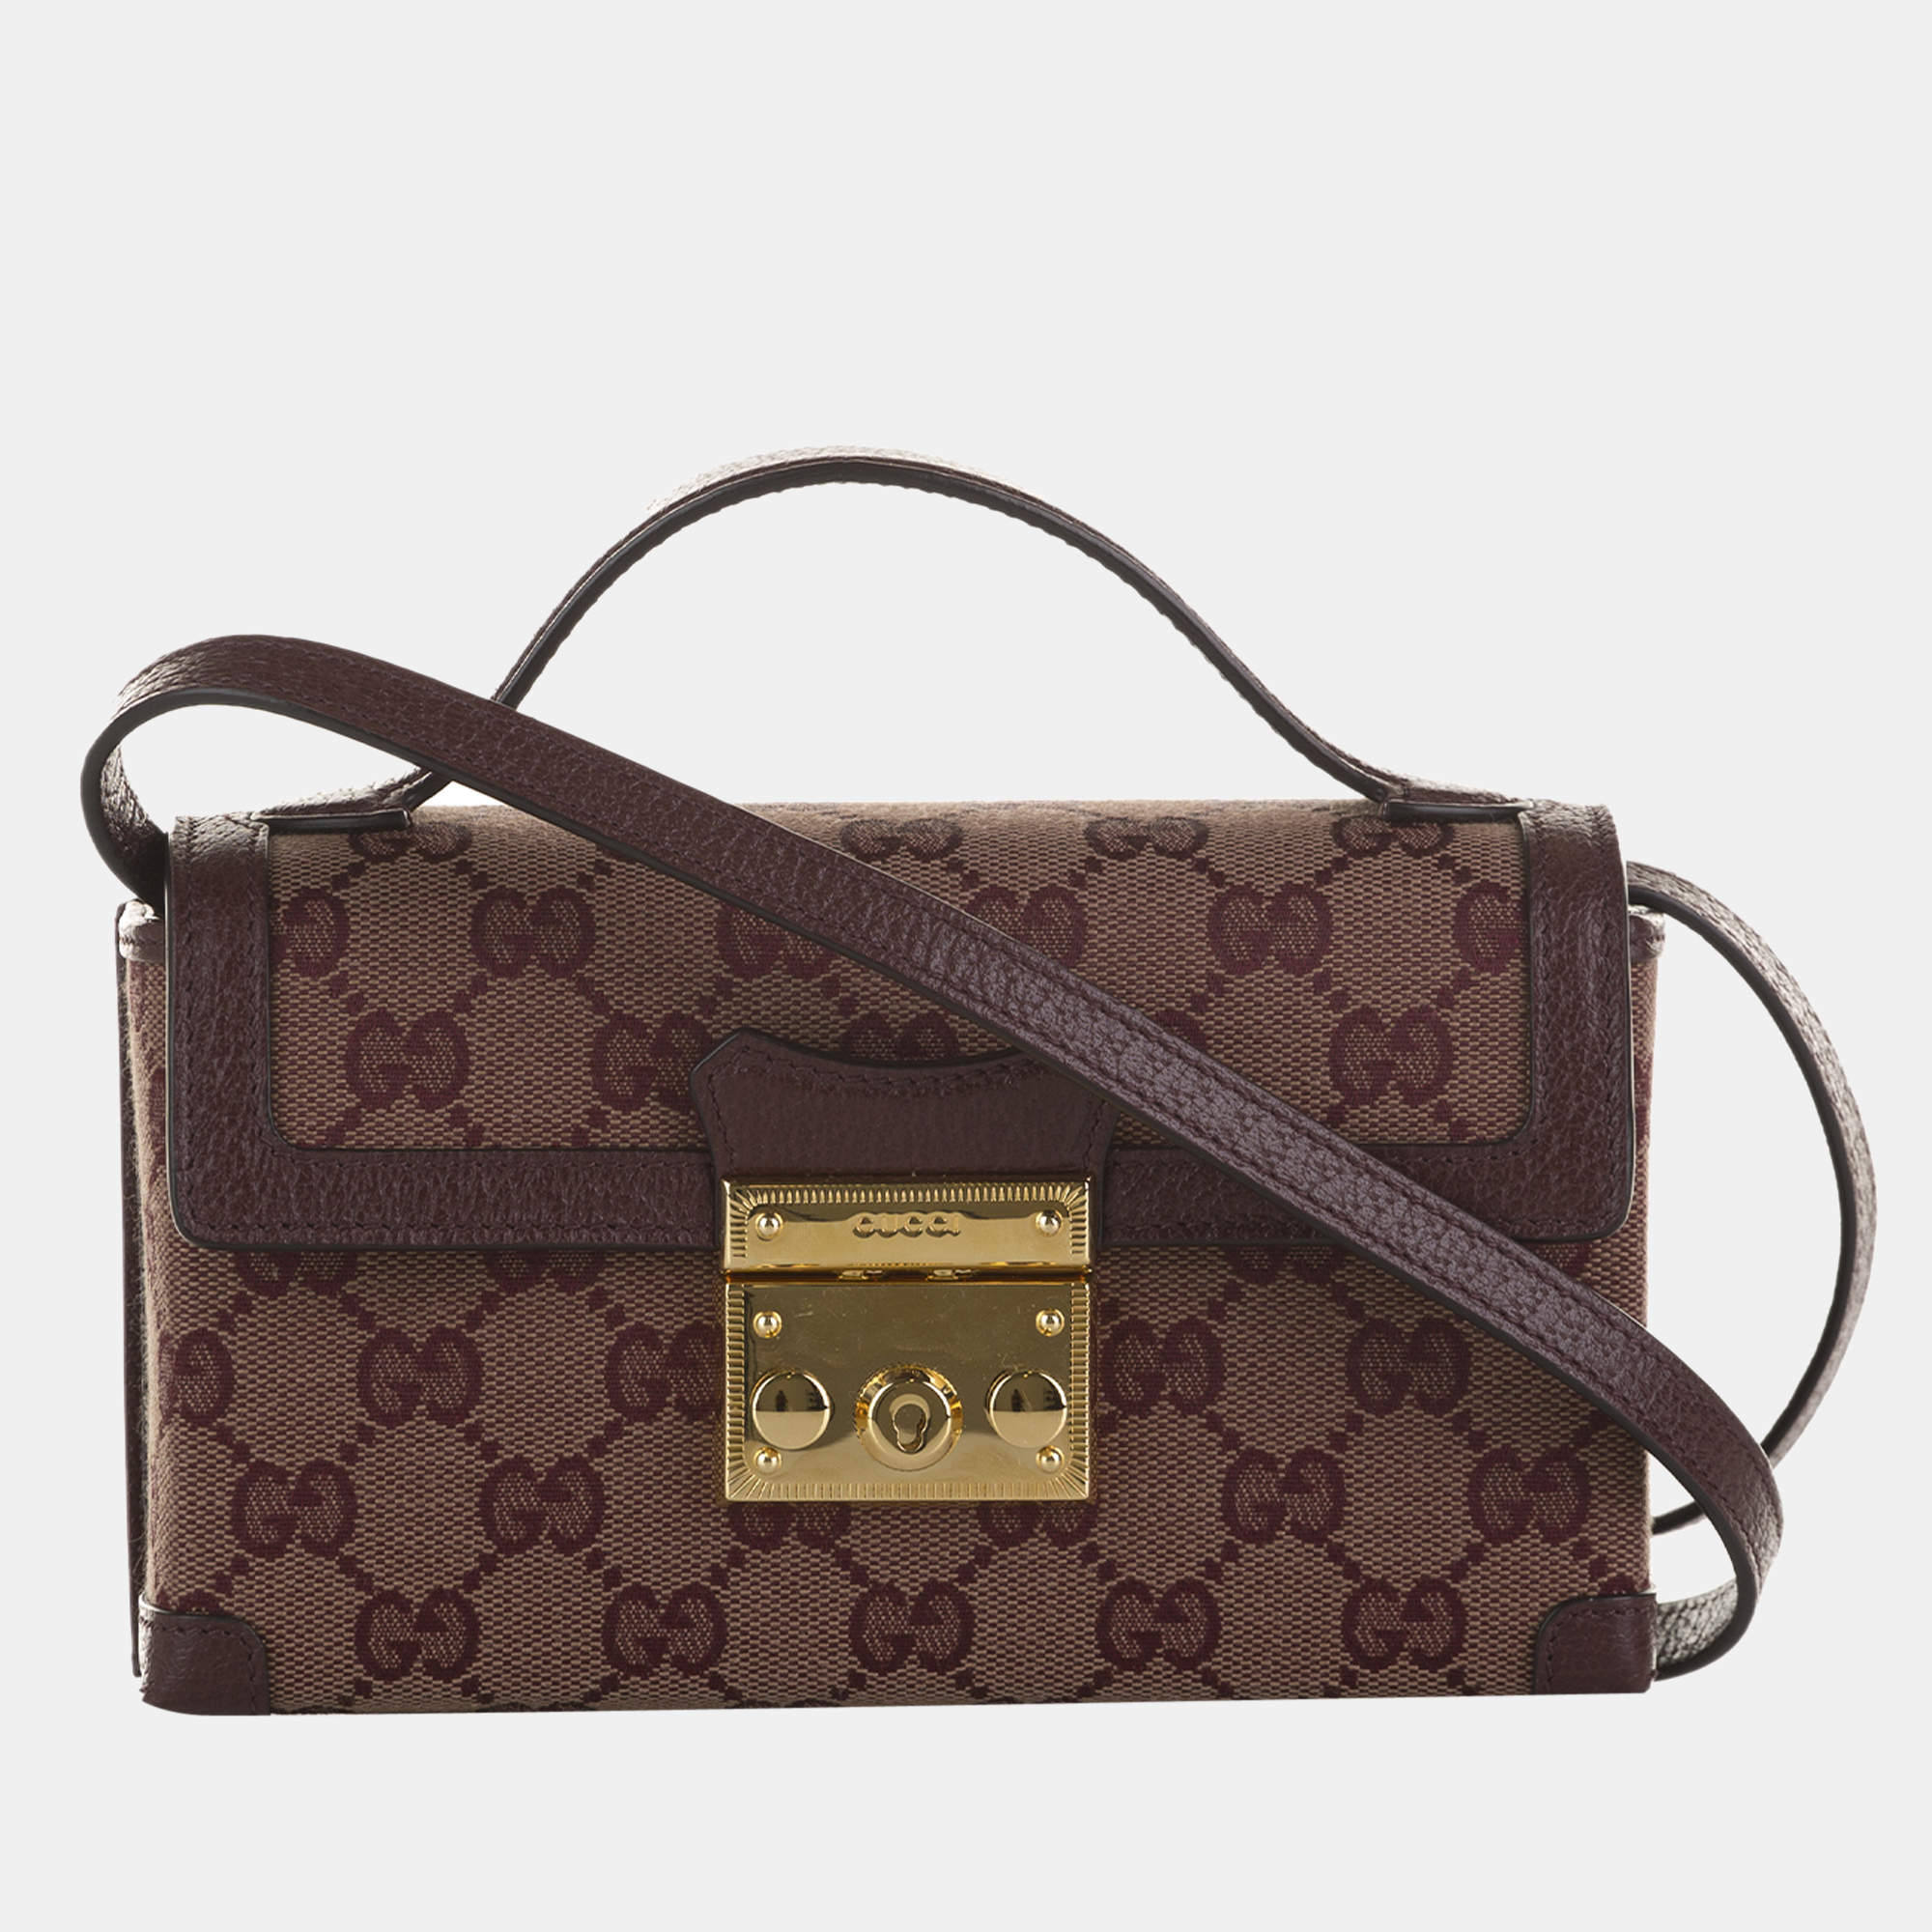 Gucci Ophidia Shoulder Bag vs. LV Alma BB please help! : r/handbags